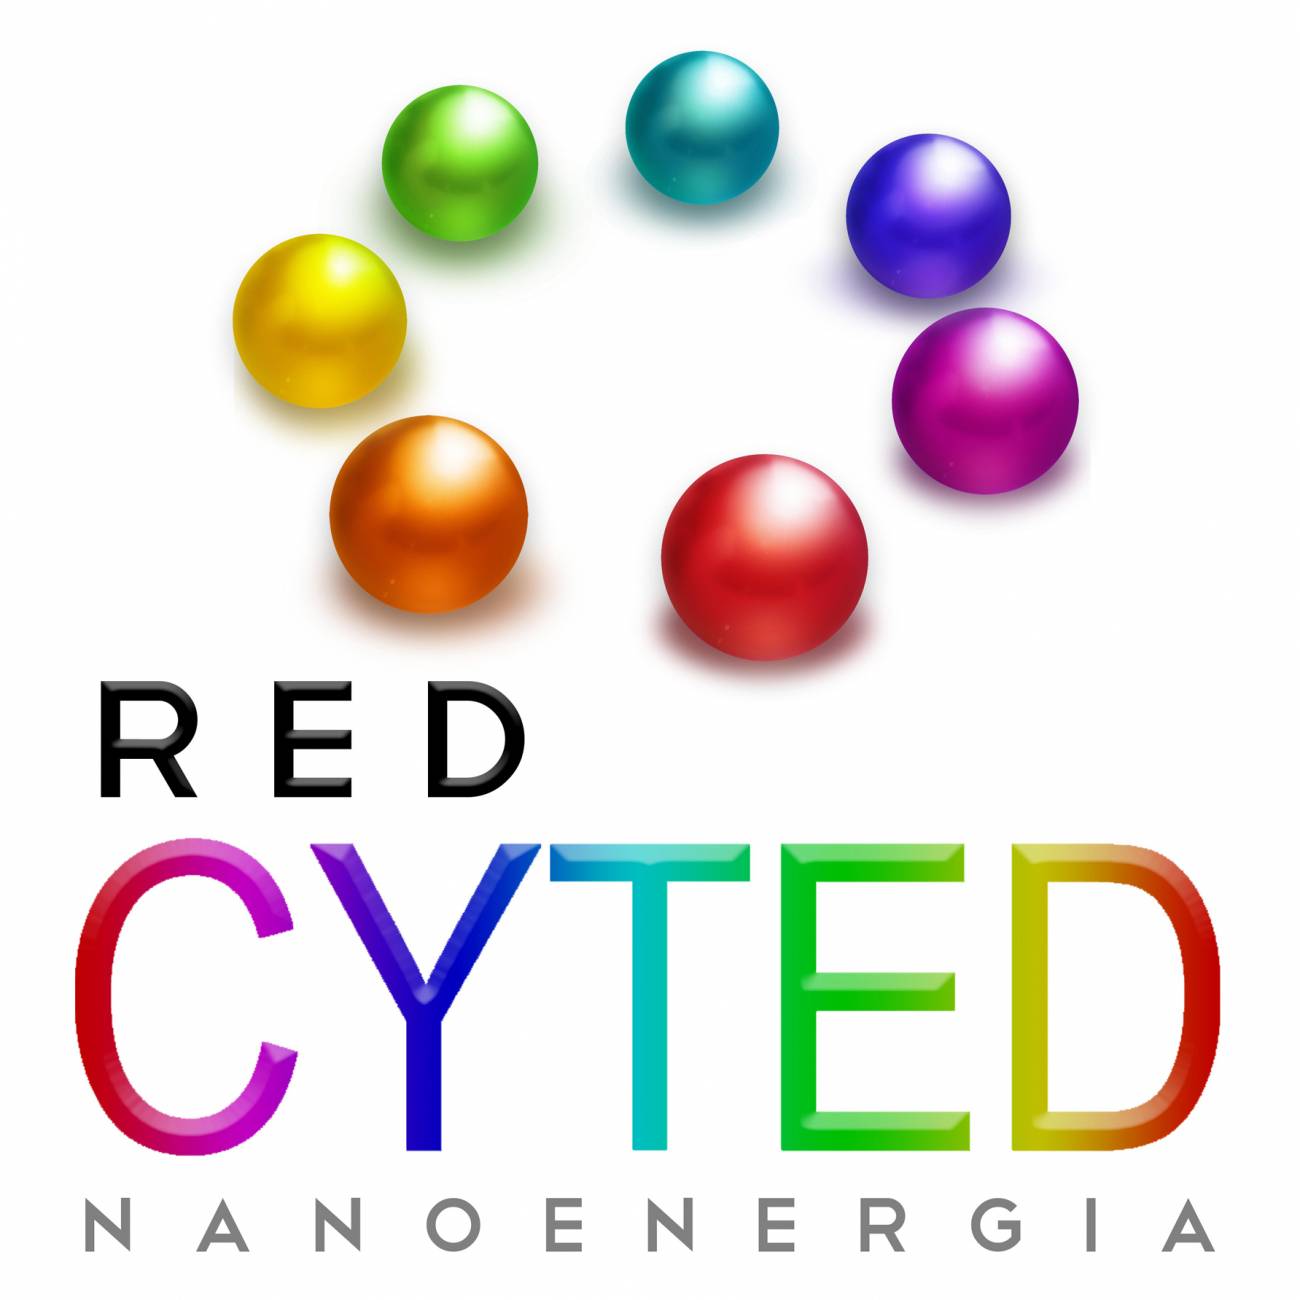 Red CYTED Naotecnología